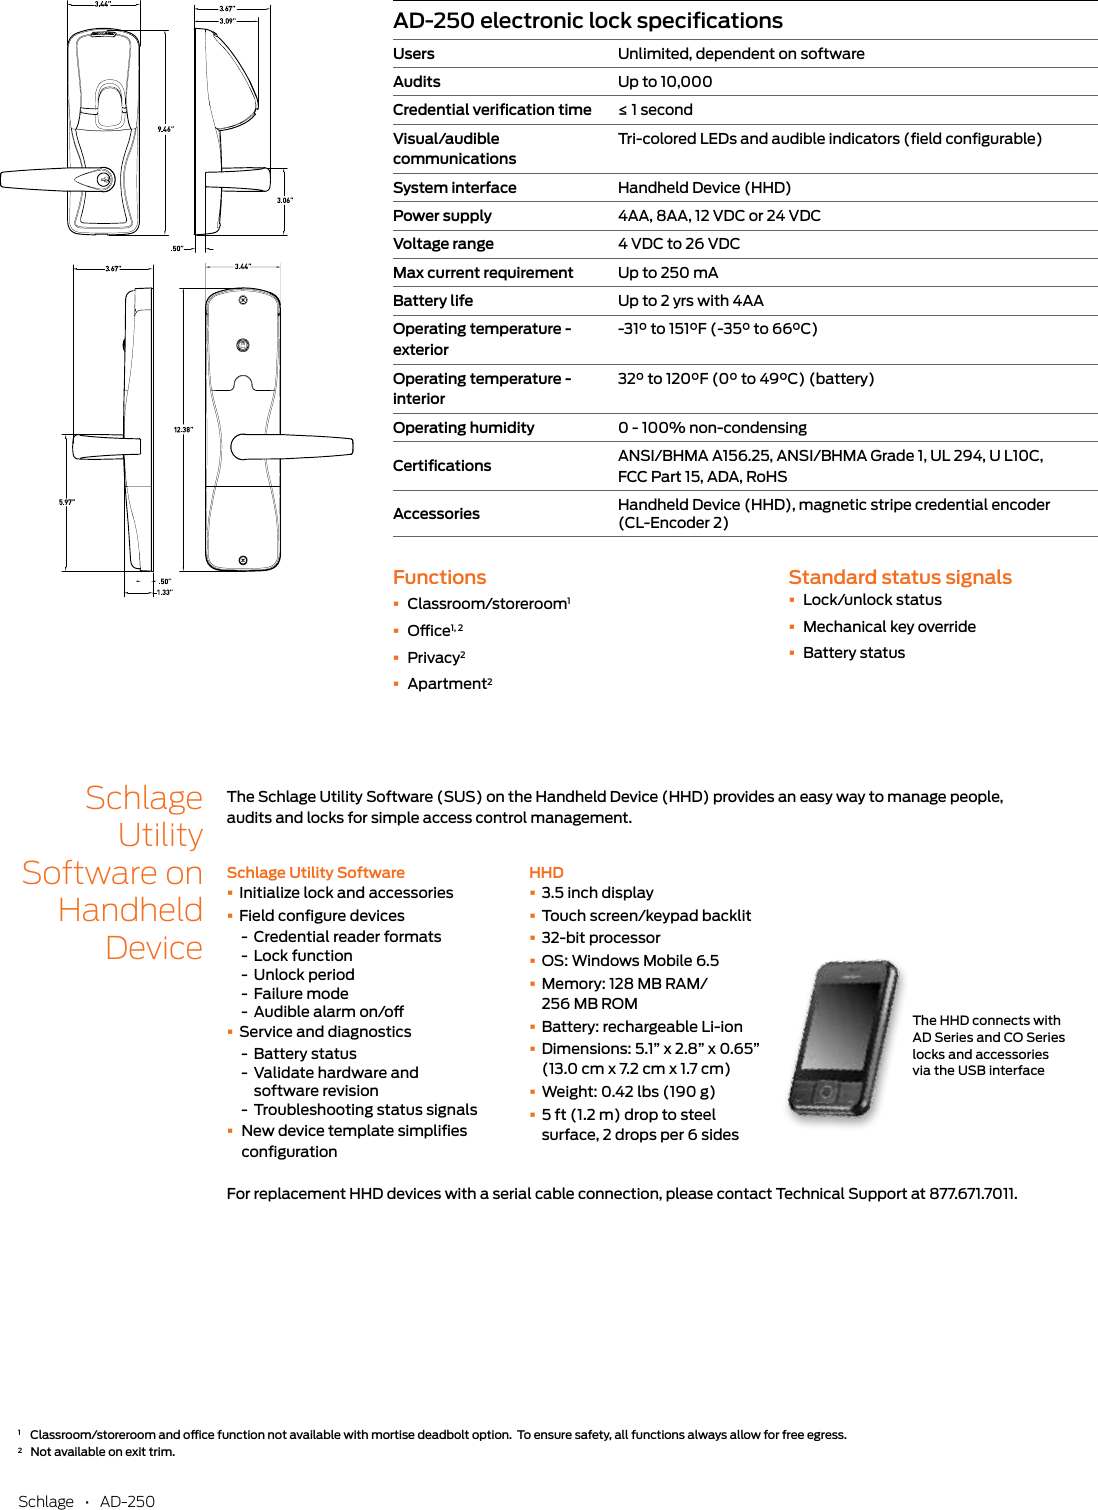 Page 2 of 4 - Schlage Electronics  AD-250 Datasheet 104436